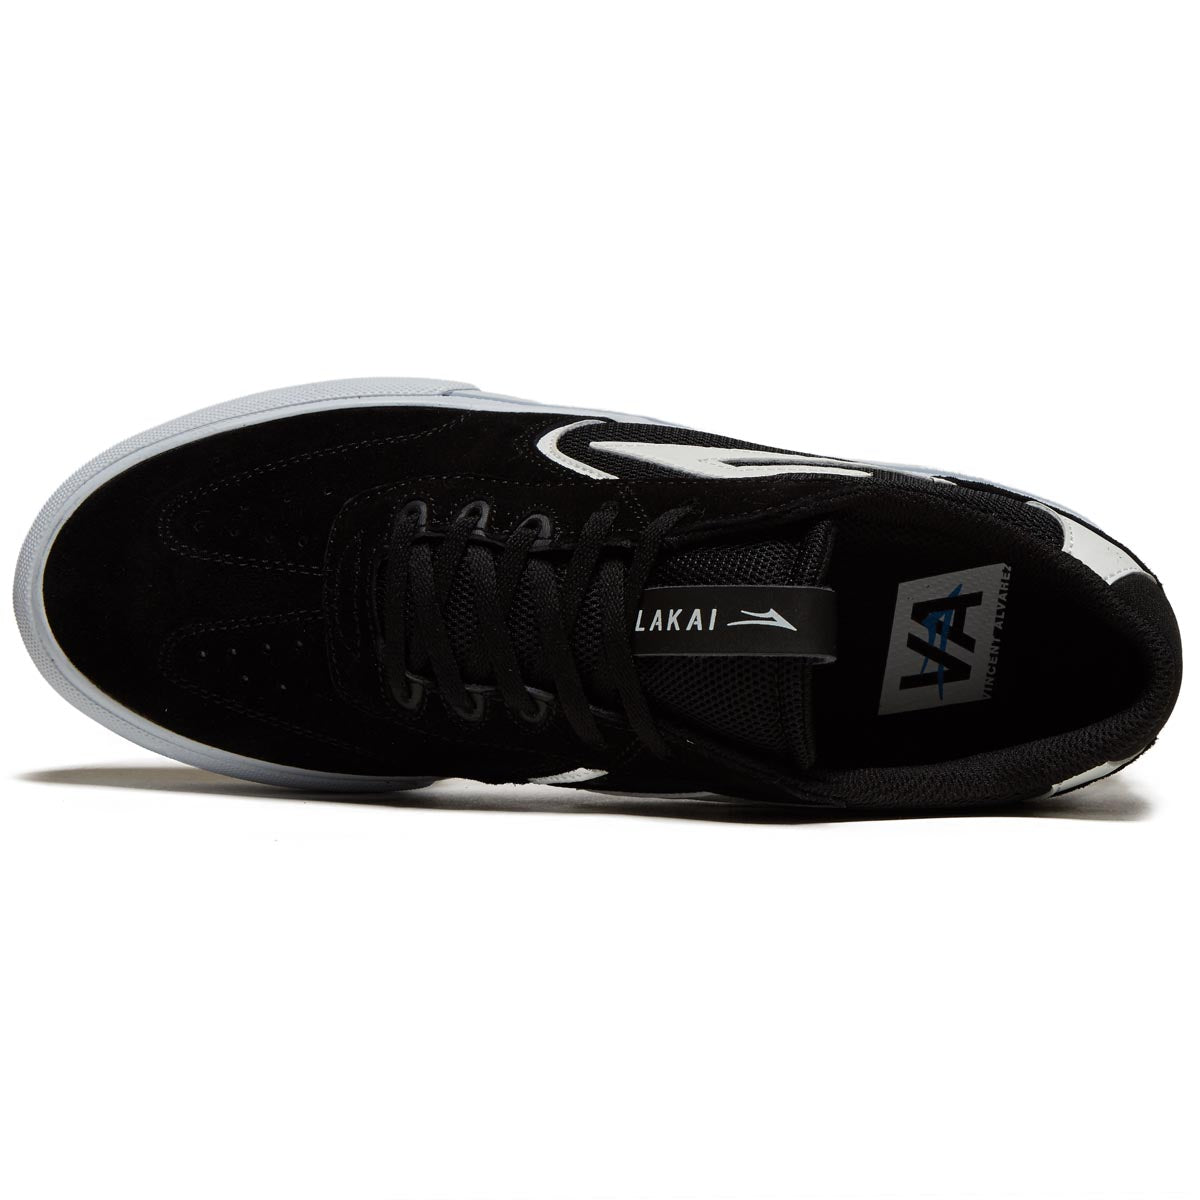 Lakai Atlantic Vulc Shoes - Black/White Suede image 3